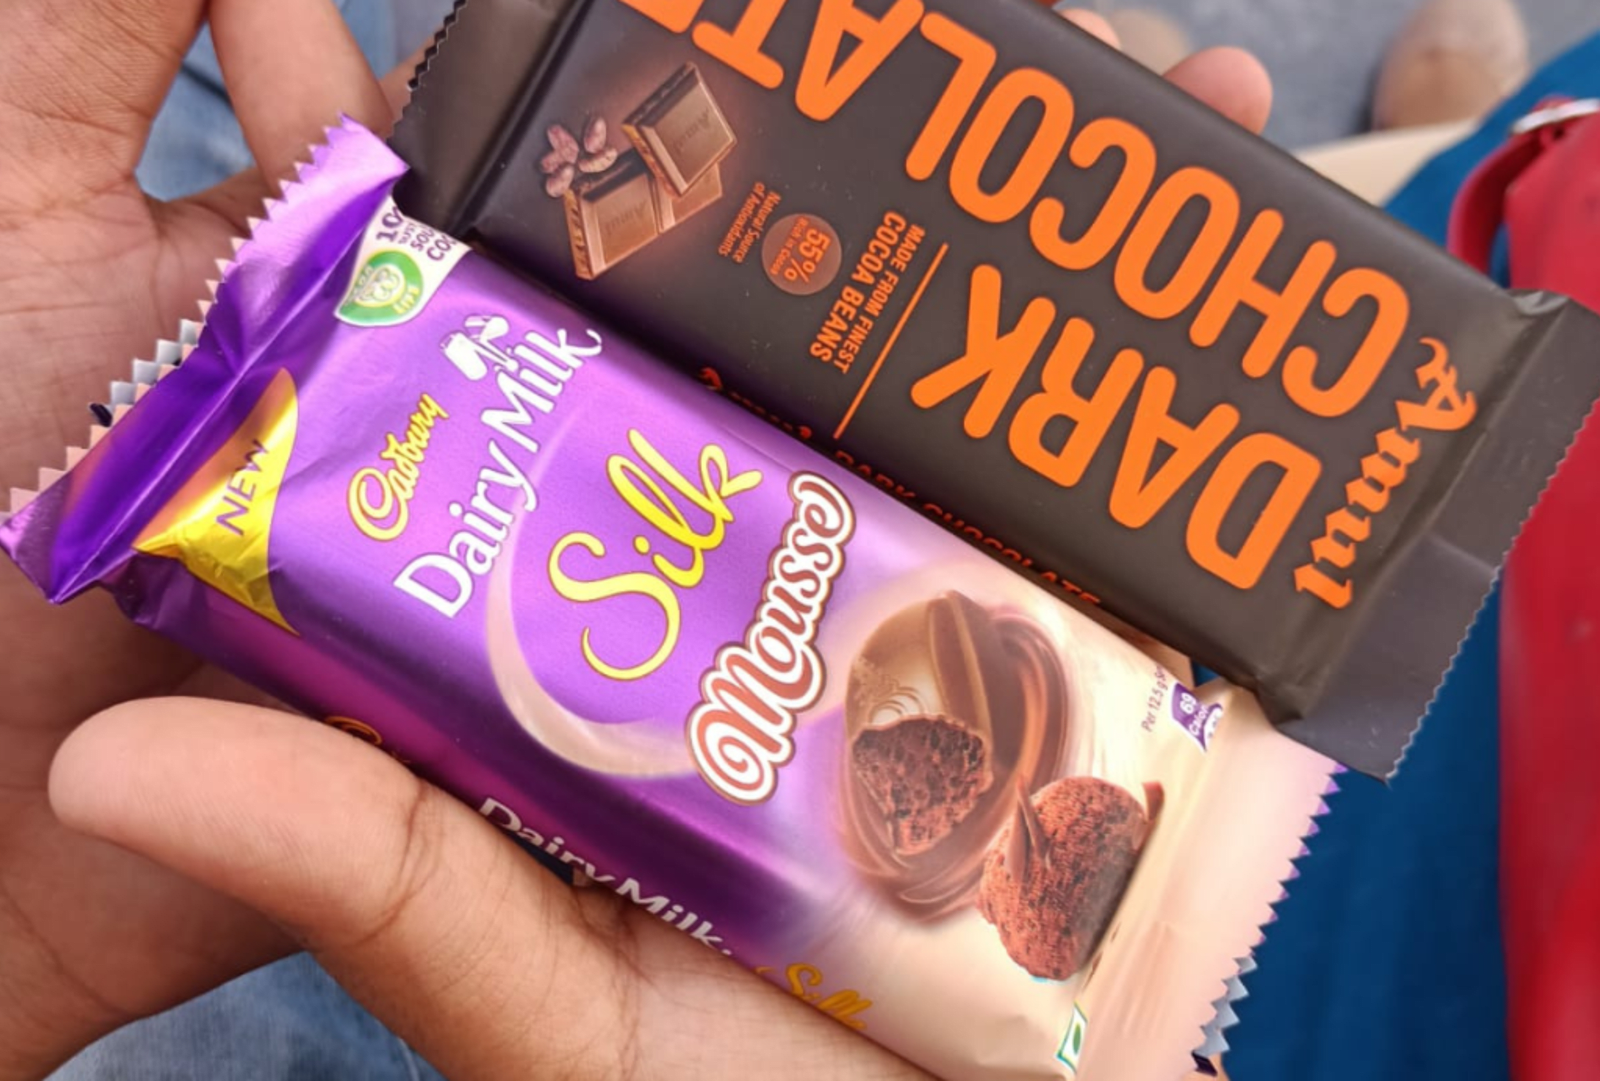 A Cadbury chocolate bar in its wrapper